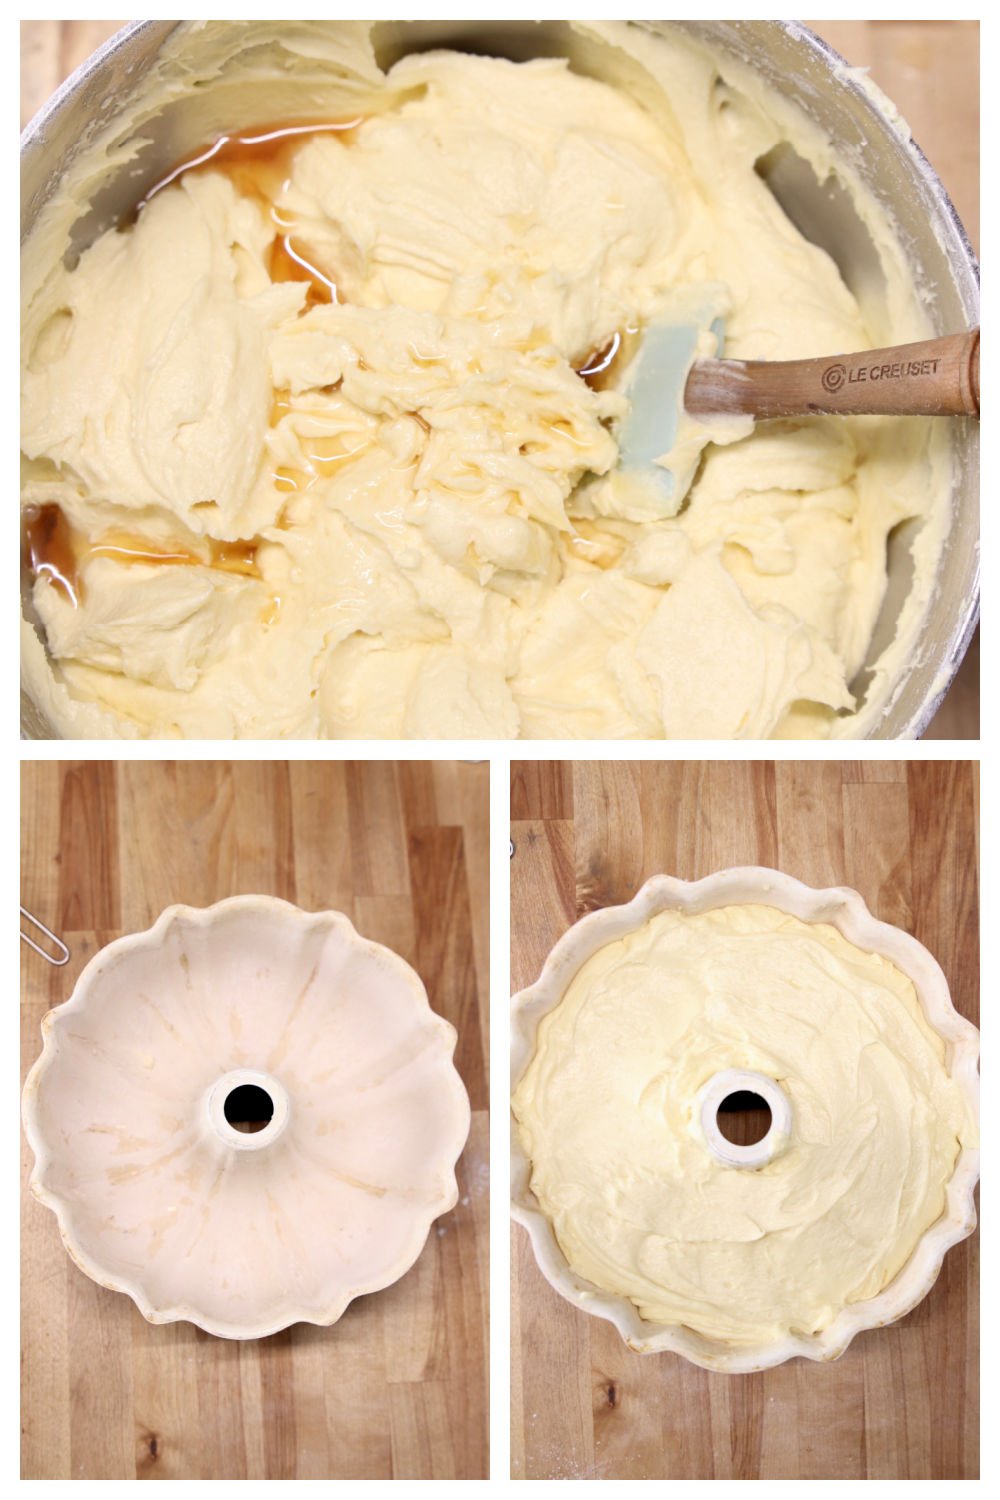 folding vanilla extract into cake batter, floured bundt pan, pan with cake batter